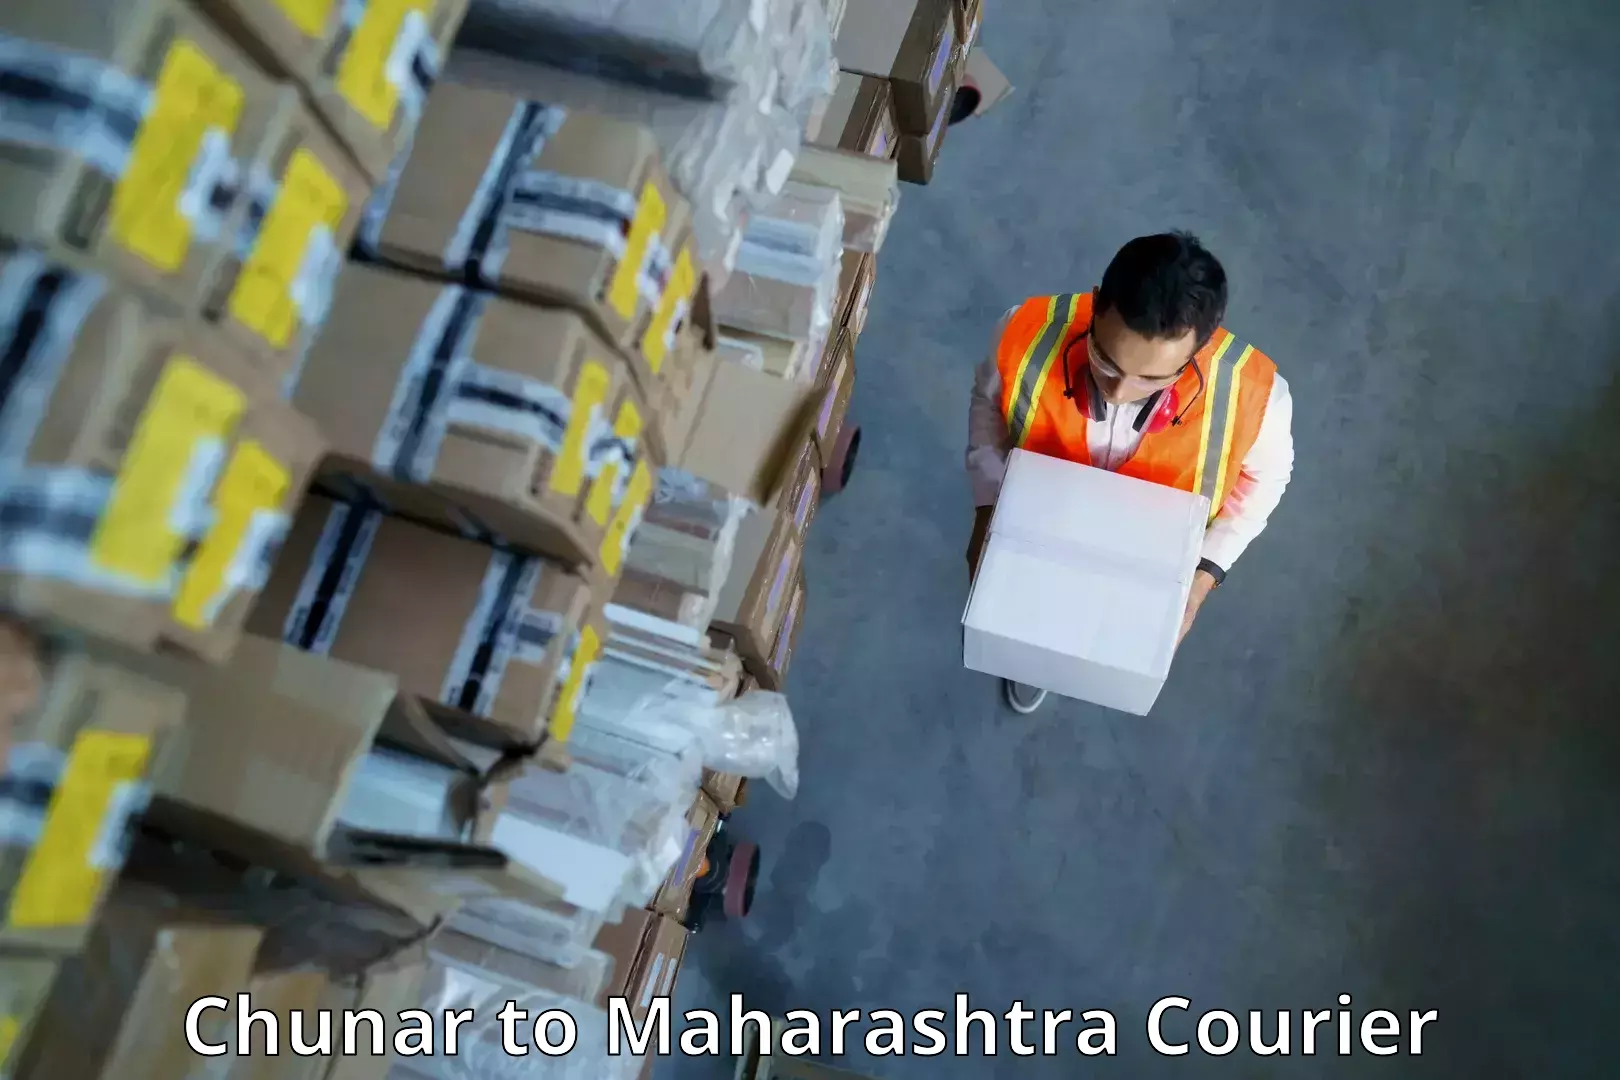 High-performance logistics Chunar to Dadar